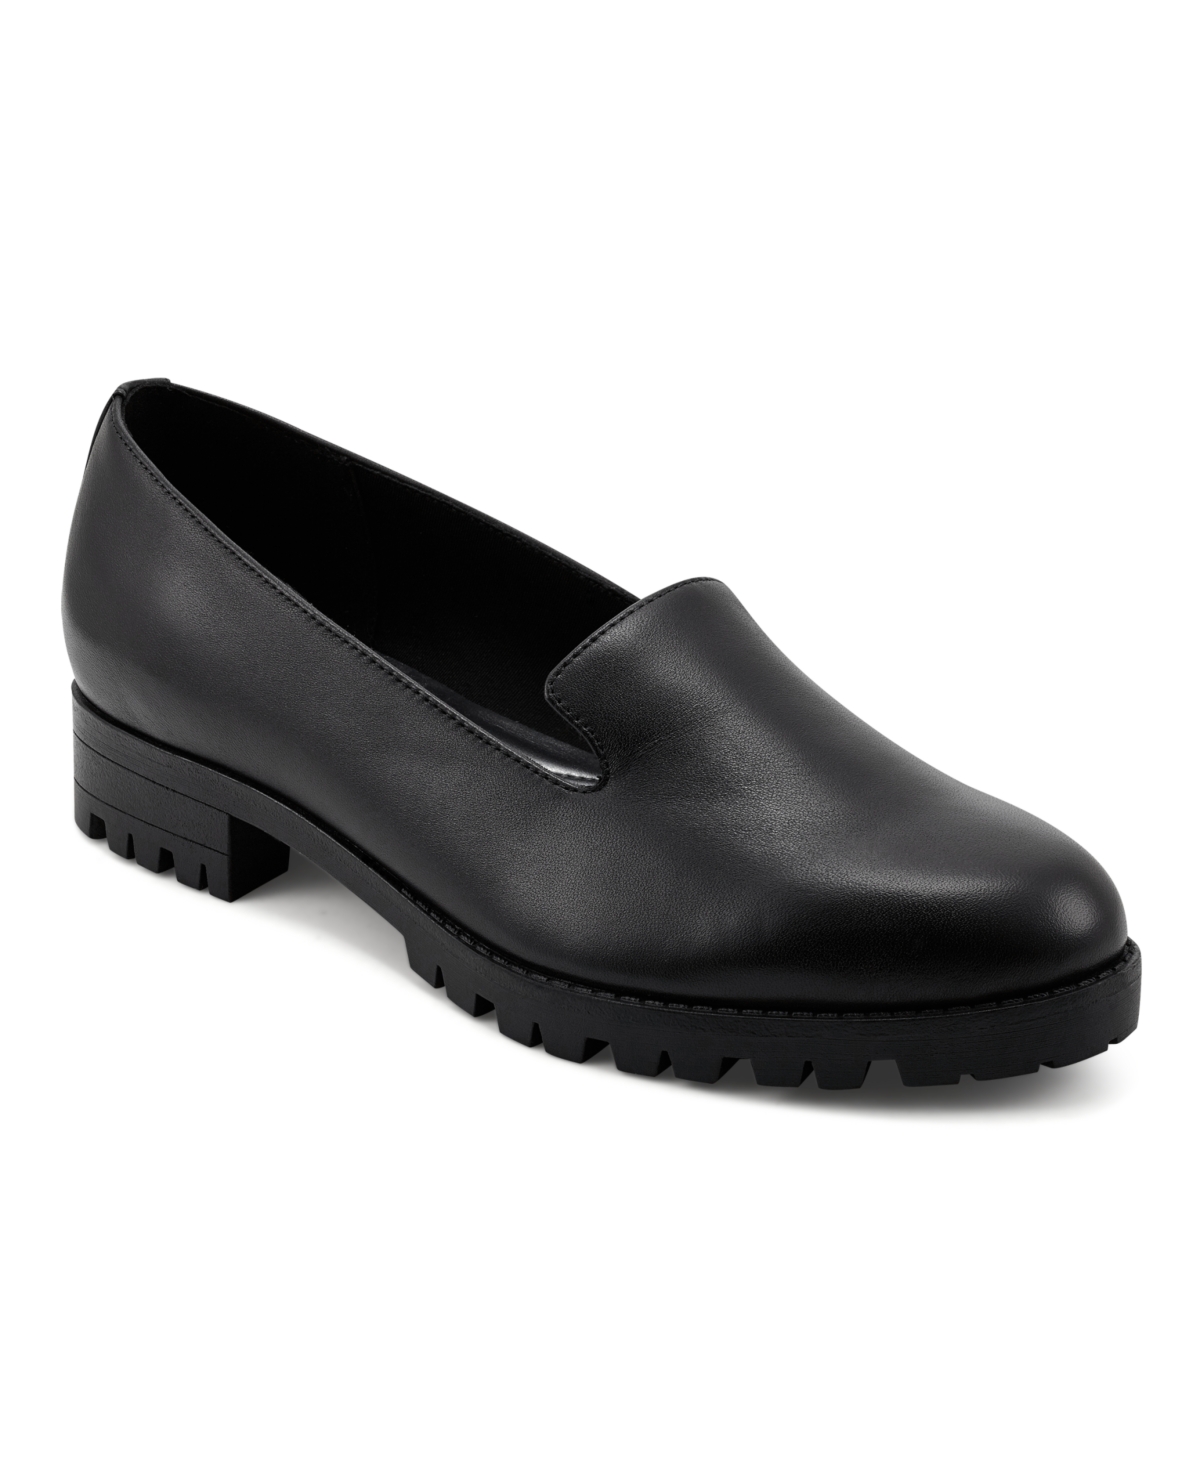 Women's Eflex Geneva Round Toe Casual Slip-on Loafers - Black Leather